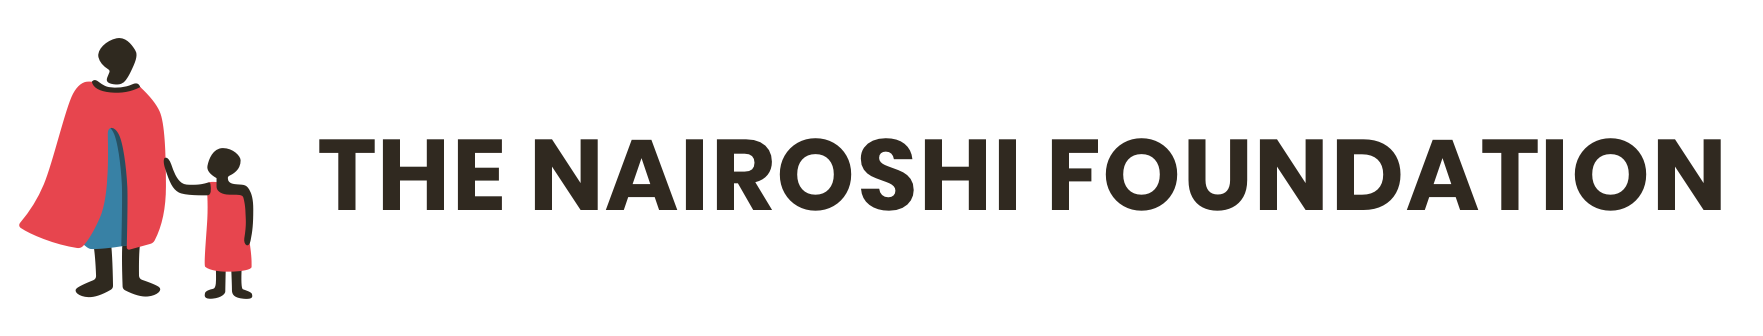 The Nairoshi Foundation